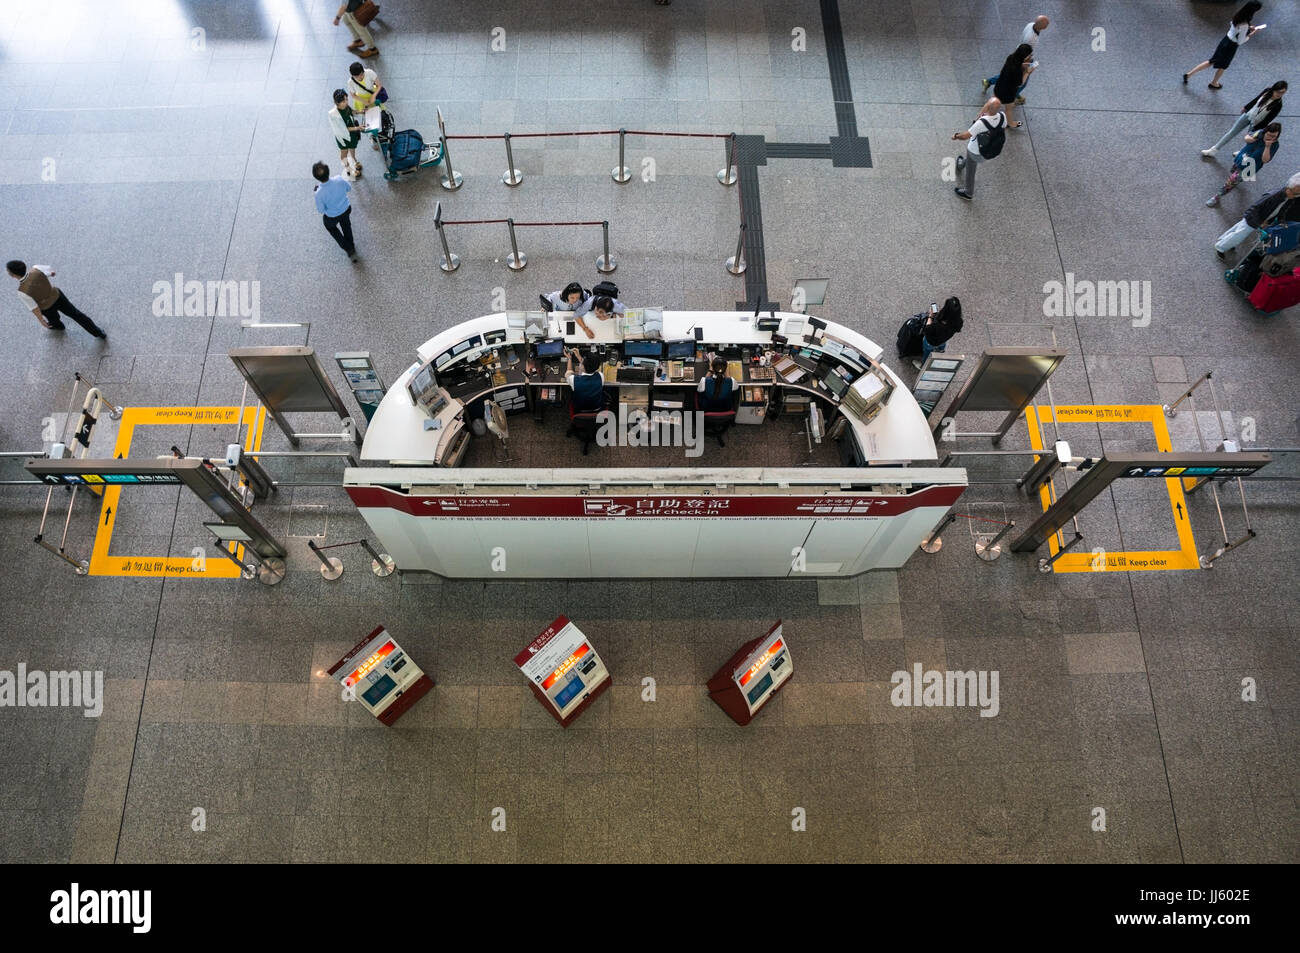 Hong Kong airport express check in counter, aerial view Stock Photo